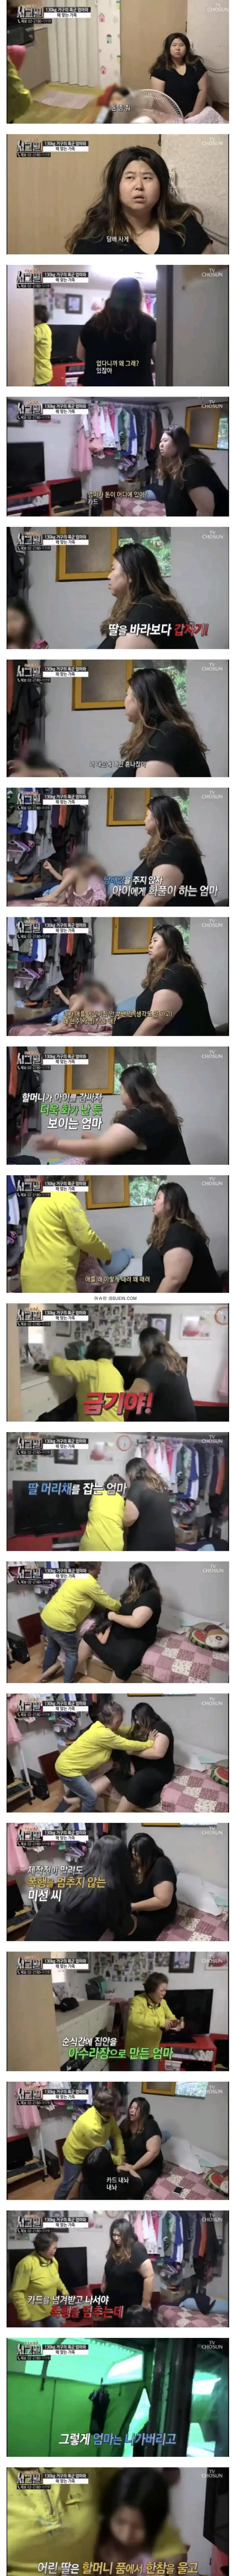 130kg 폭군 엄마와 매 맞는 가족 | mbong.kr 엠봉